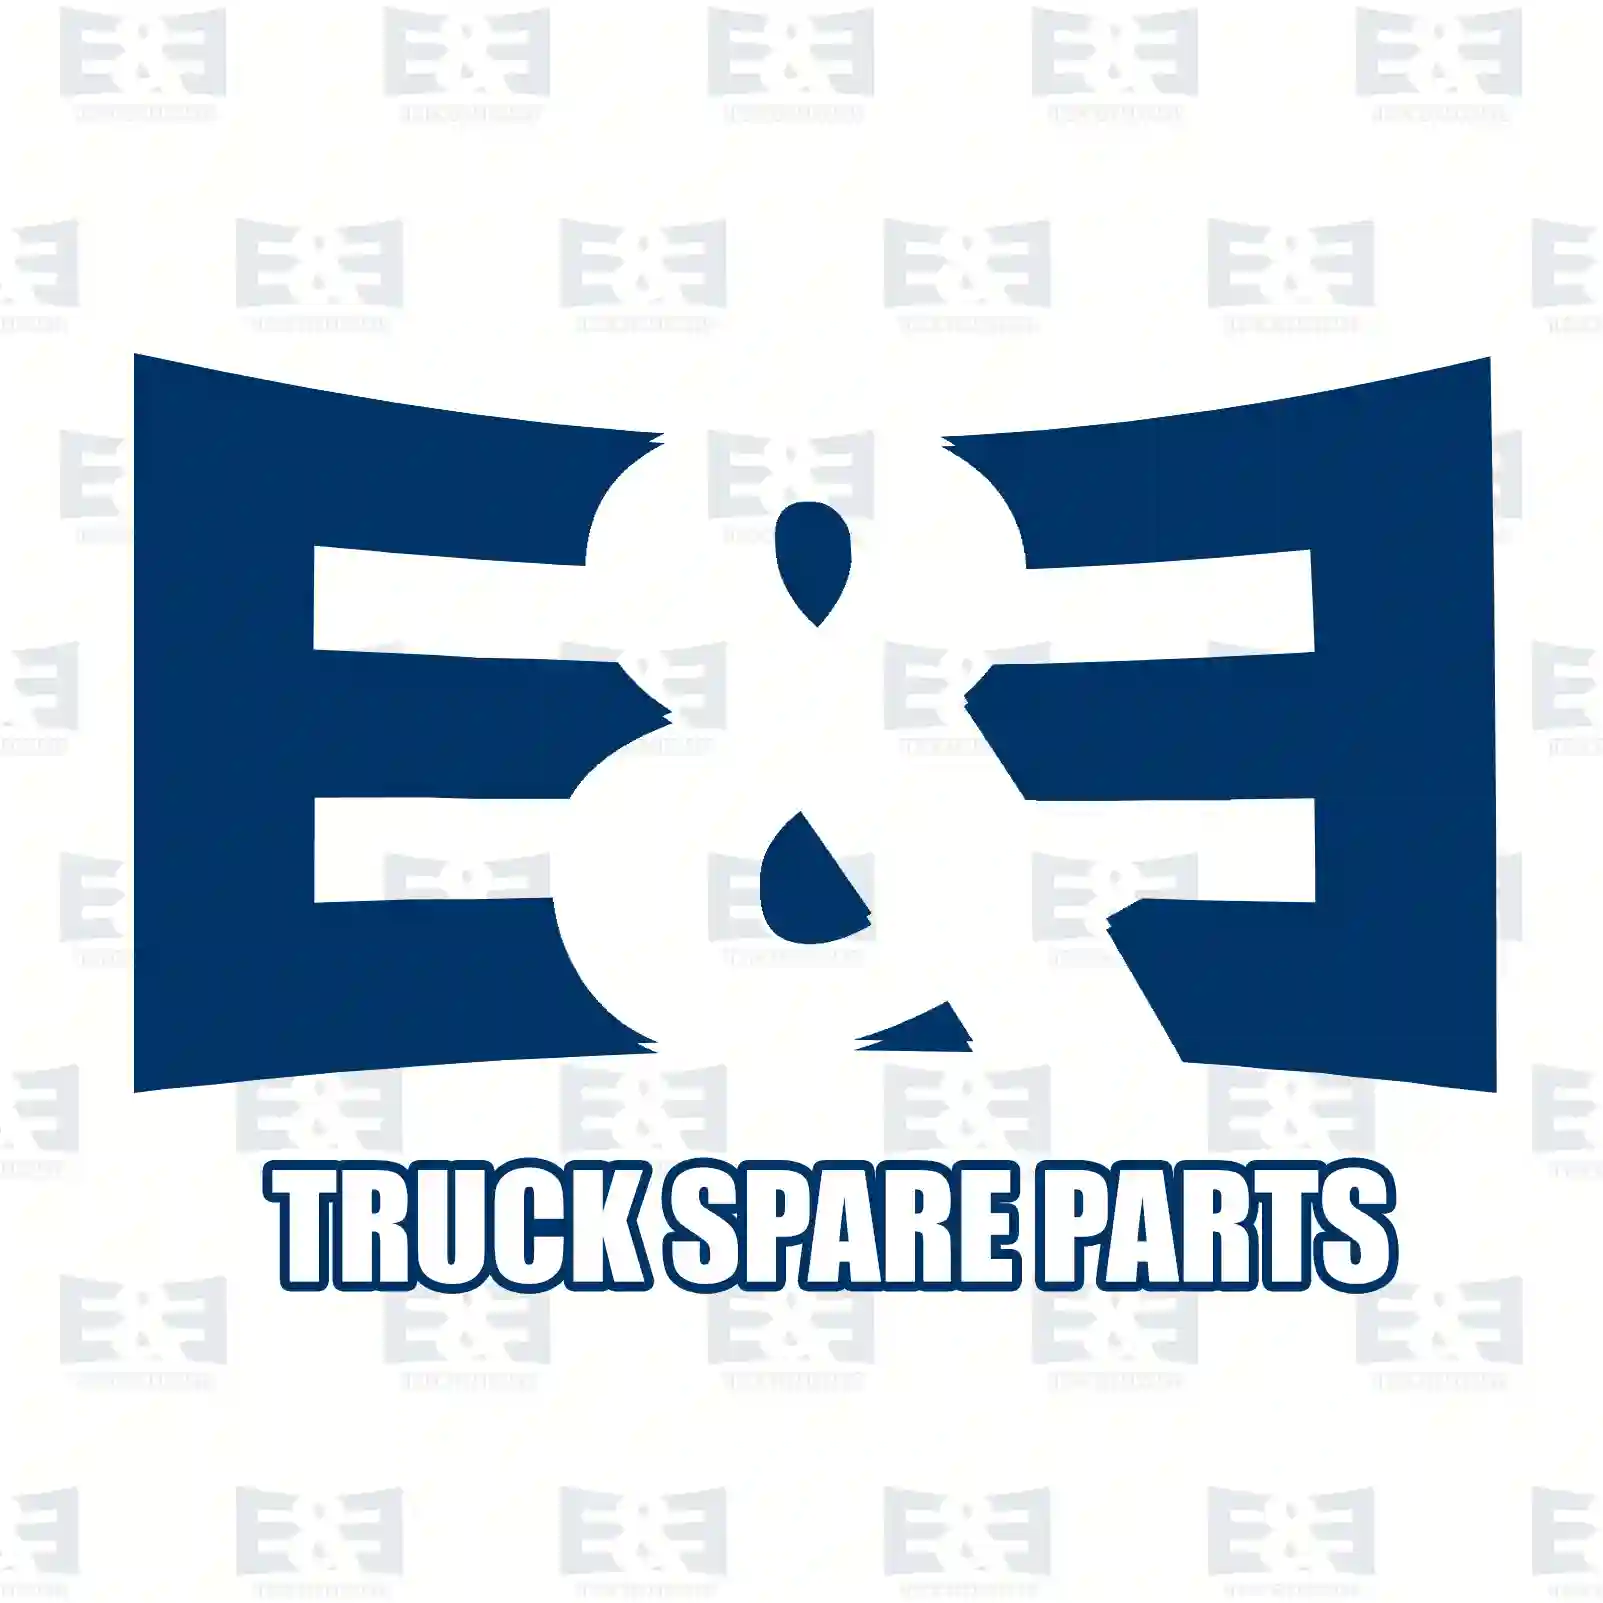  Gear shift knob || E&E Truck Spare Parts | Truck Spare Parts, Auotomotive Spare Parts